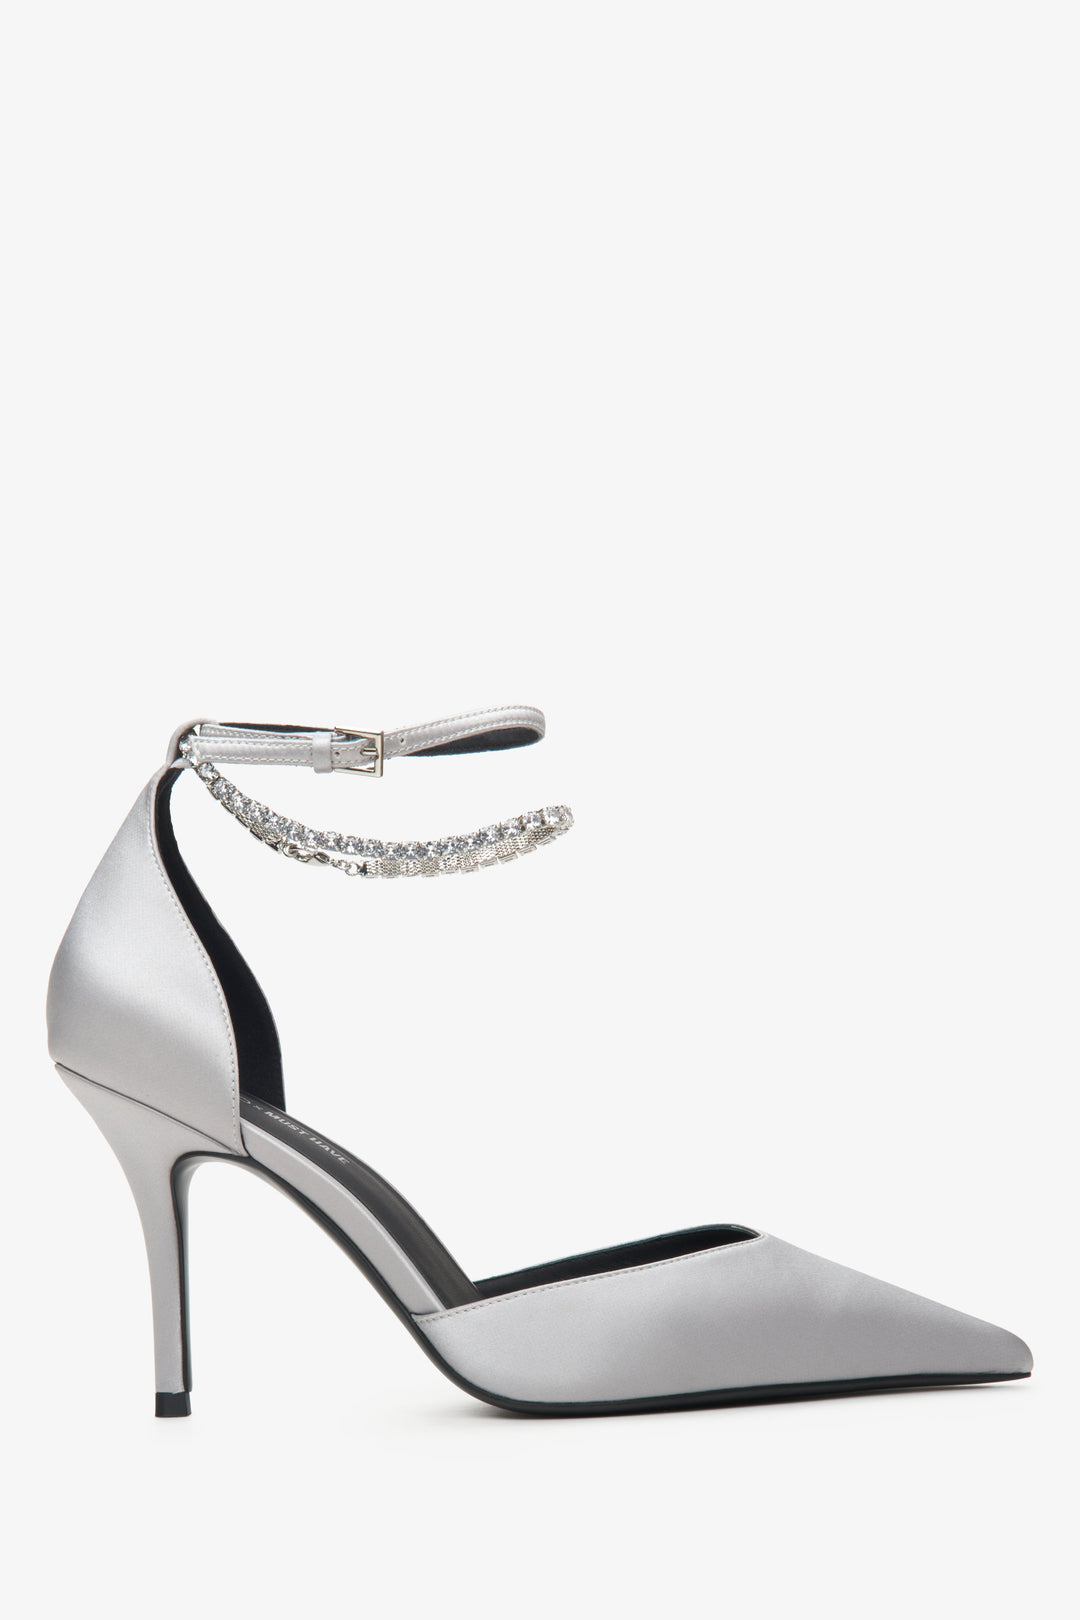 Stylish women's grey pumps by Estro x MustHave - shoe profile.